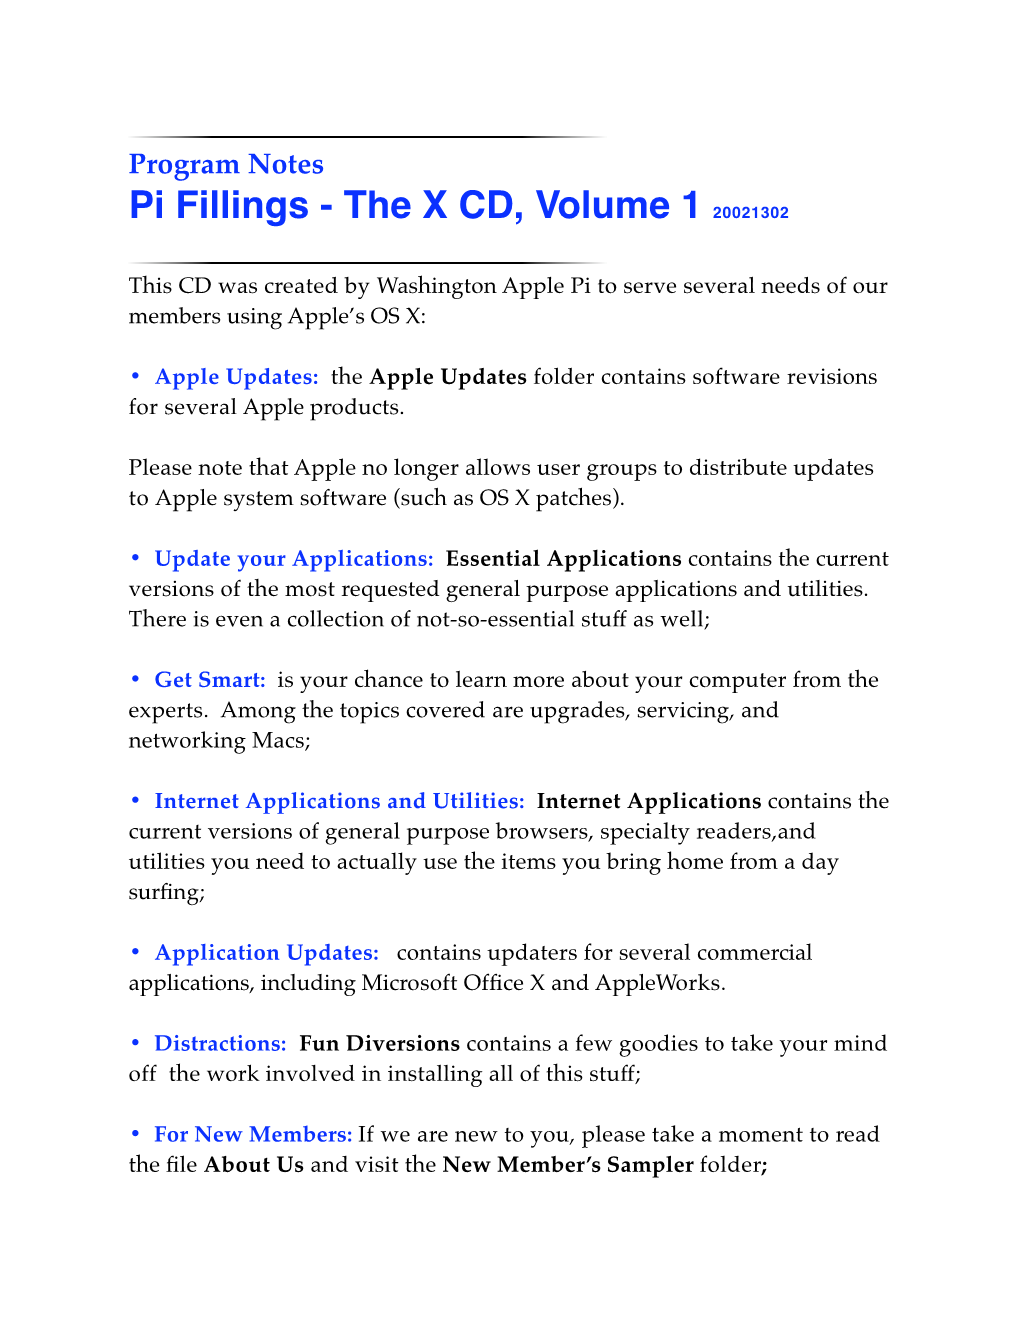 Pi Fillings -- the X CD, Volume 1